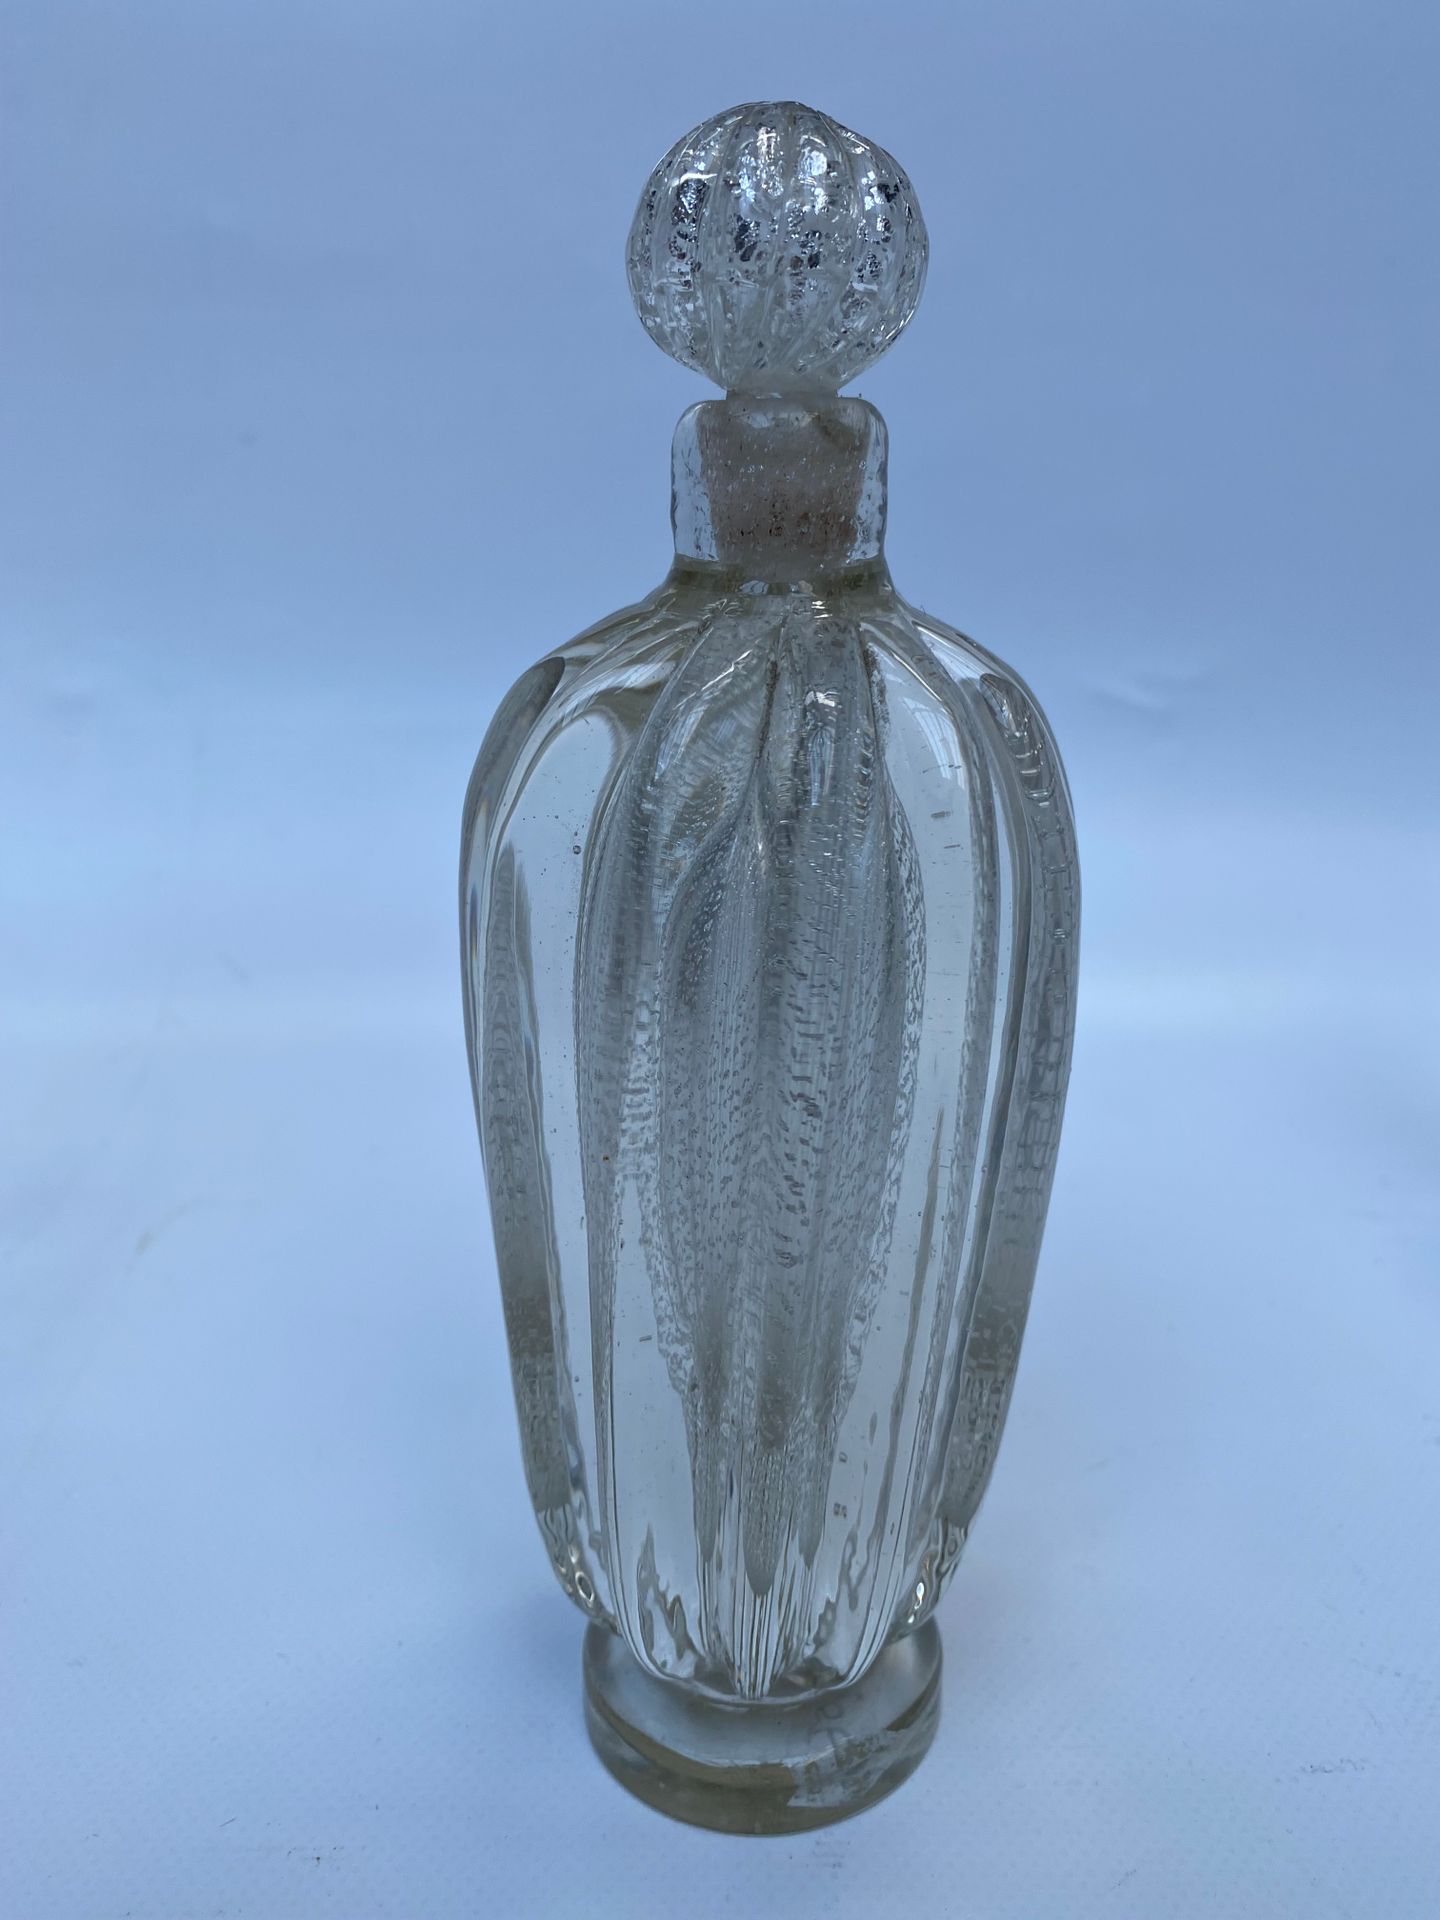 Null 玻璃瓶上装饰有大块的小石子，上面镶嵌着金色的鹅卵石。在MARINOT的味道中工作（事故到塞子）。高19,5厘米。